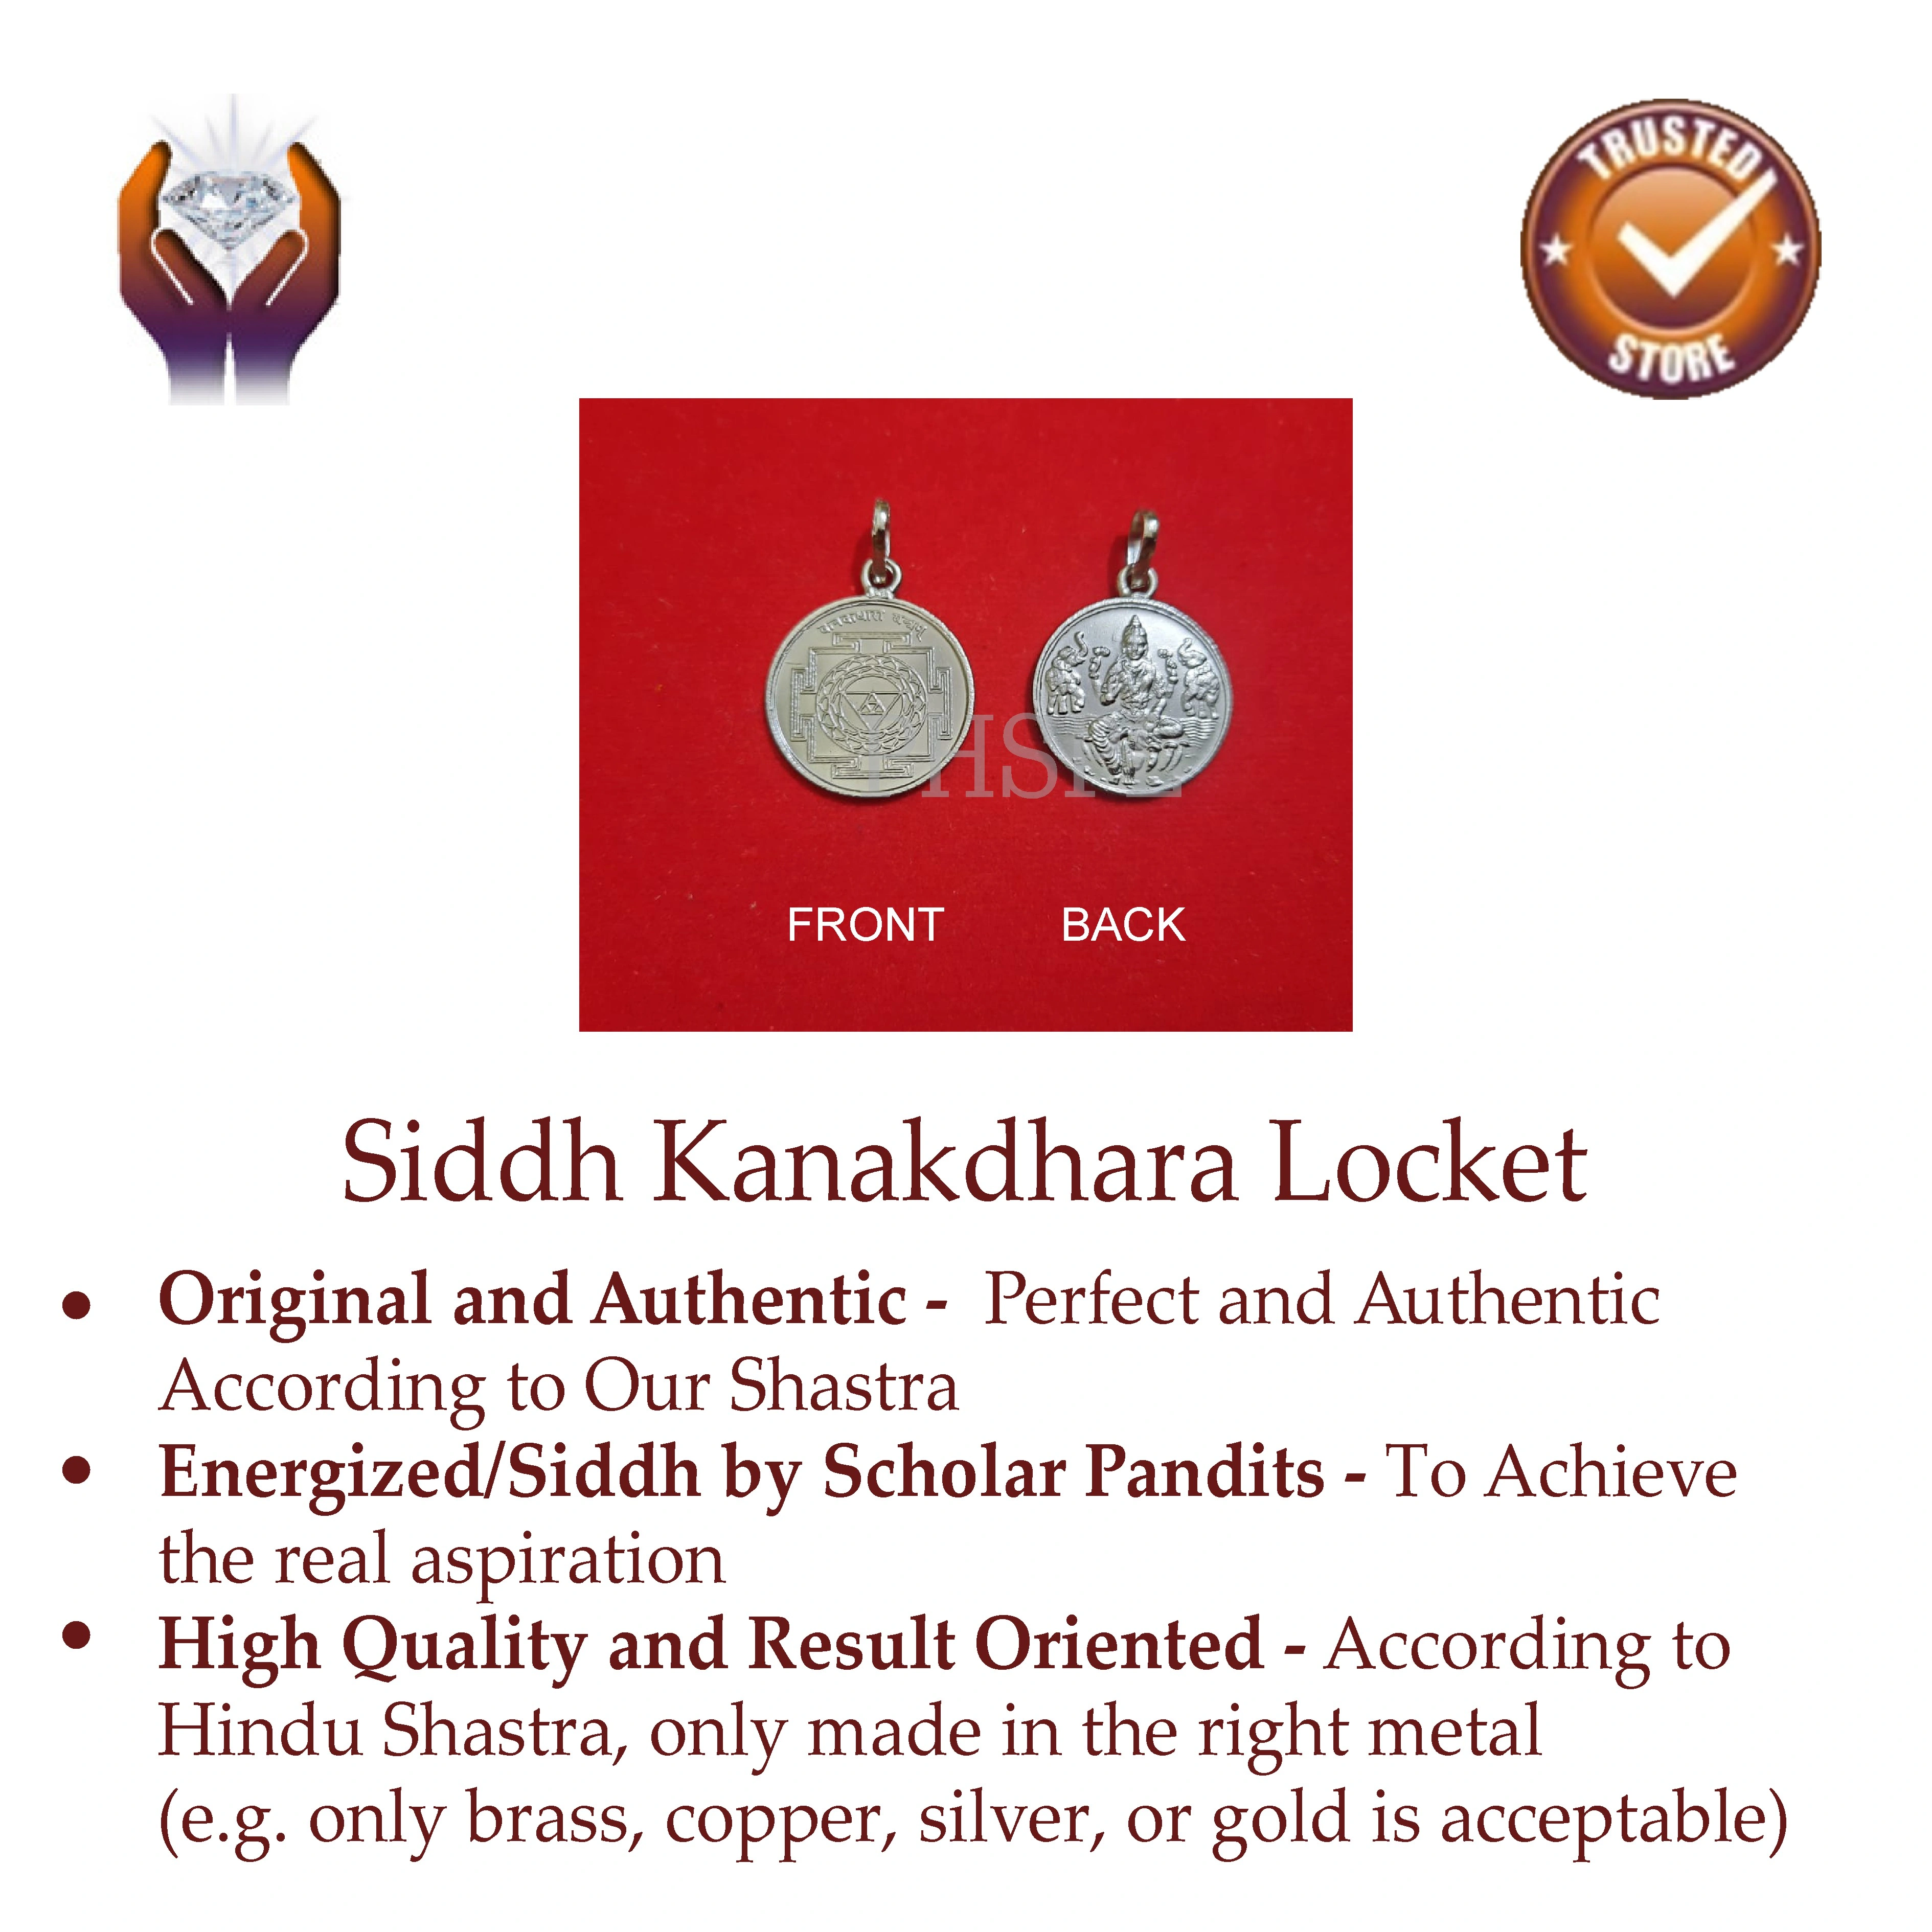 Kanakdhara Locket Benefits